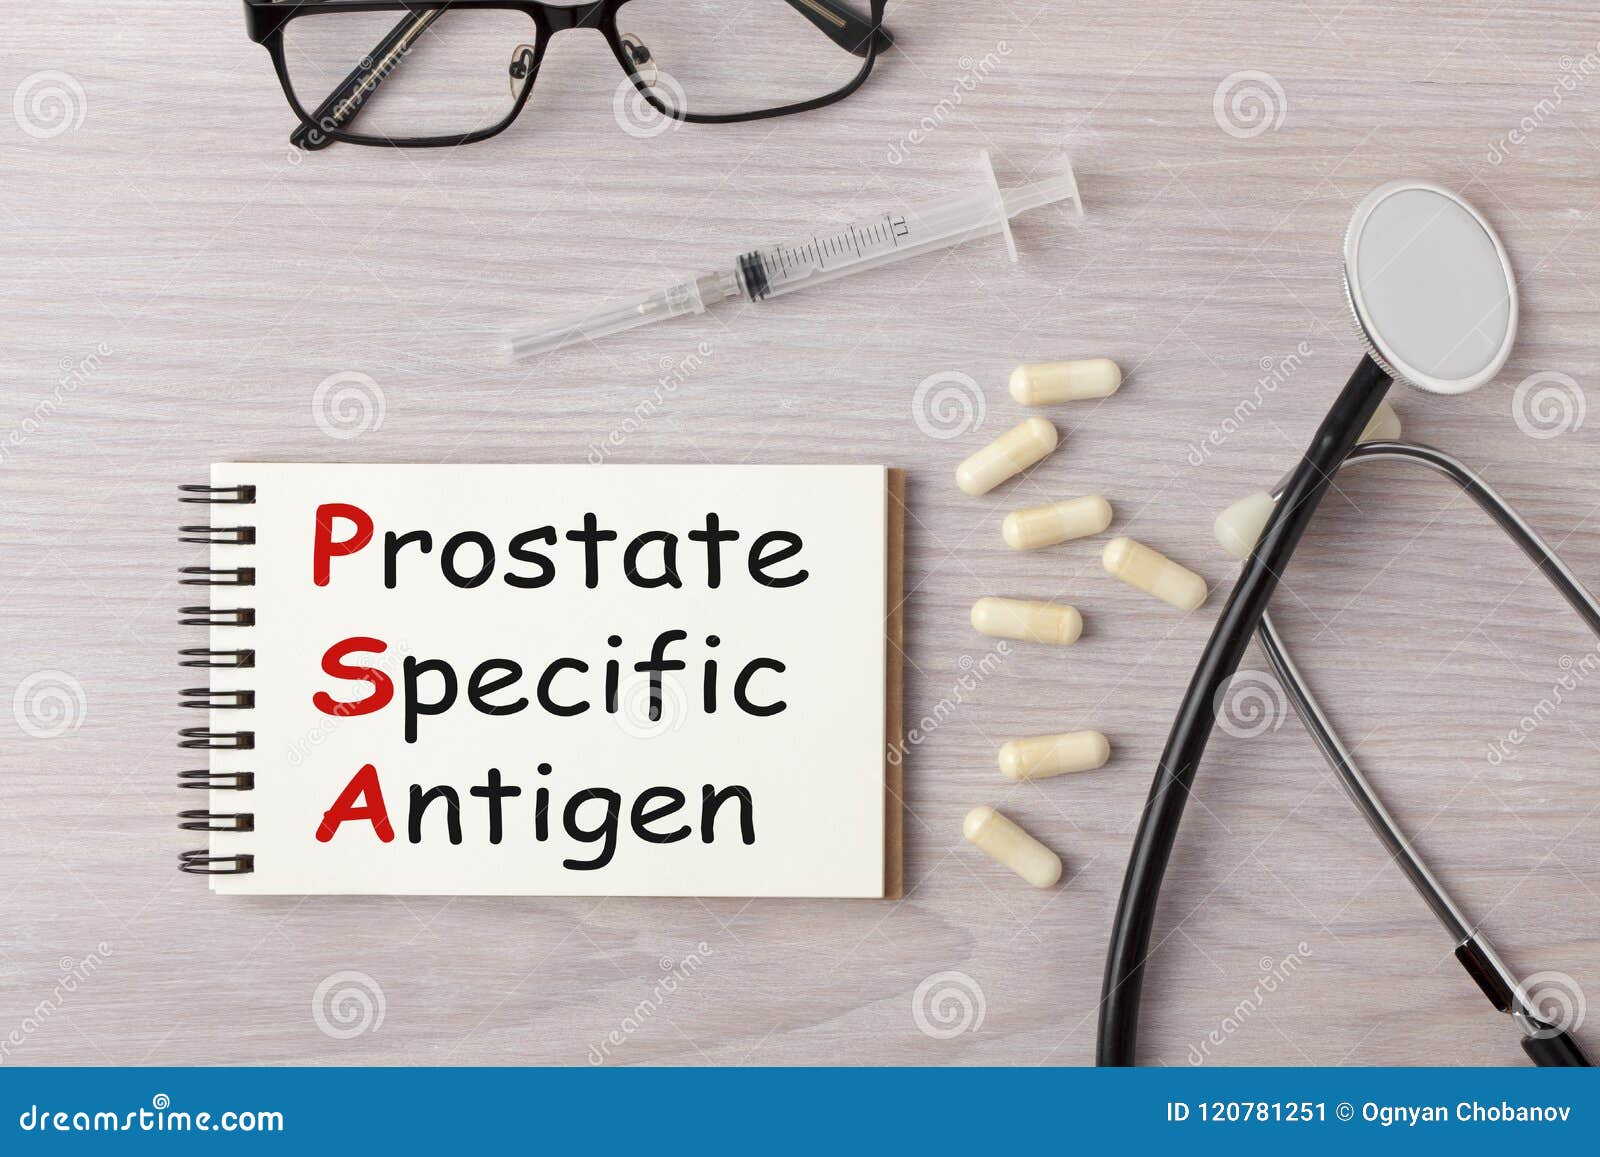 prostate-specific antigen psa